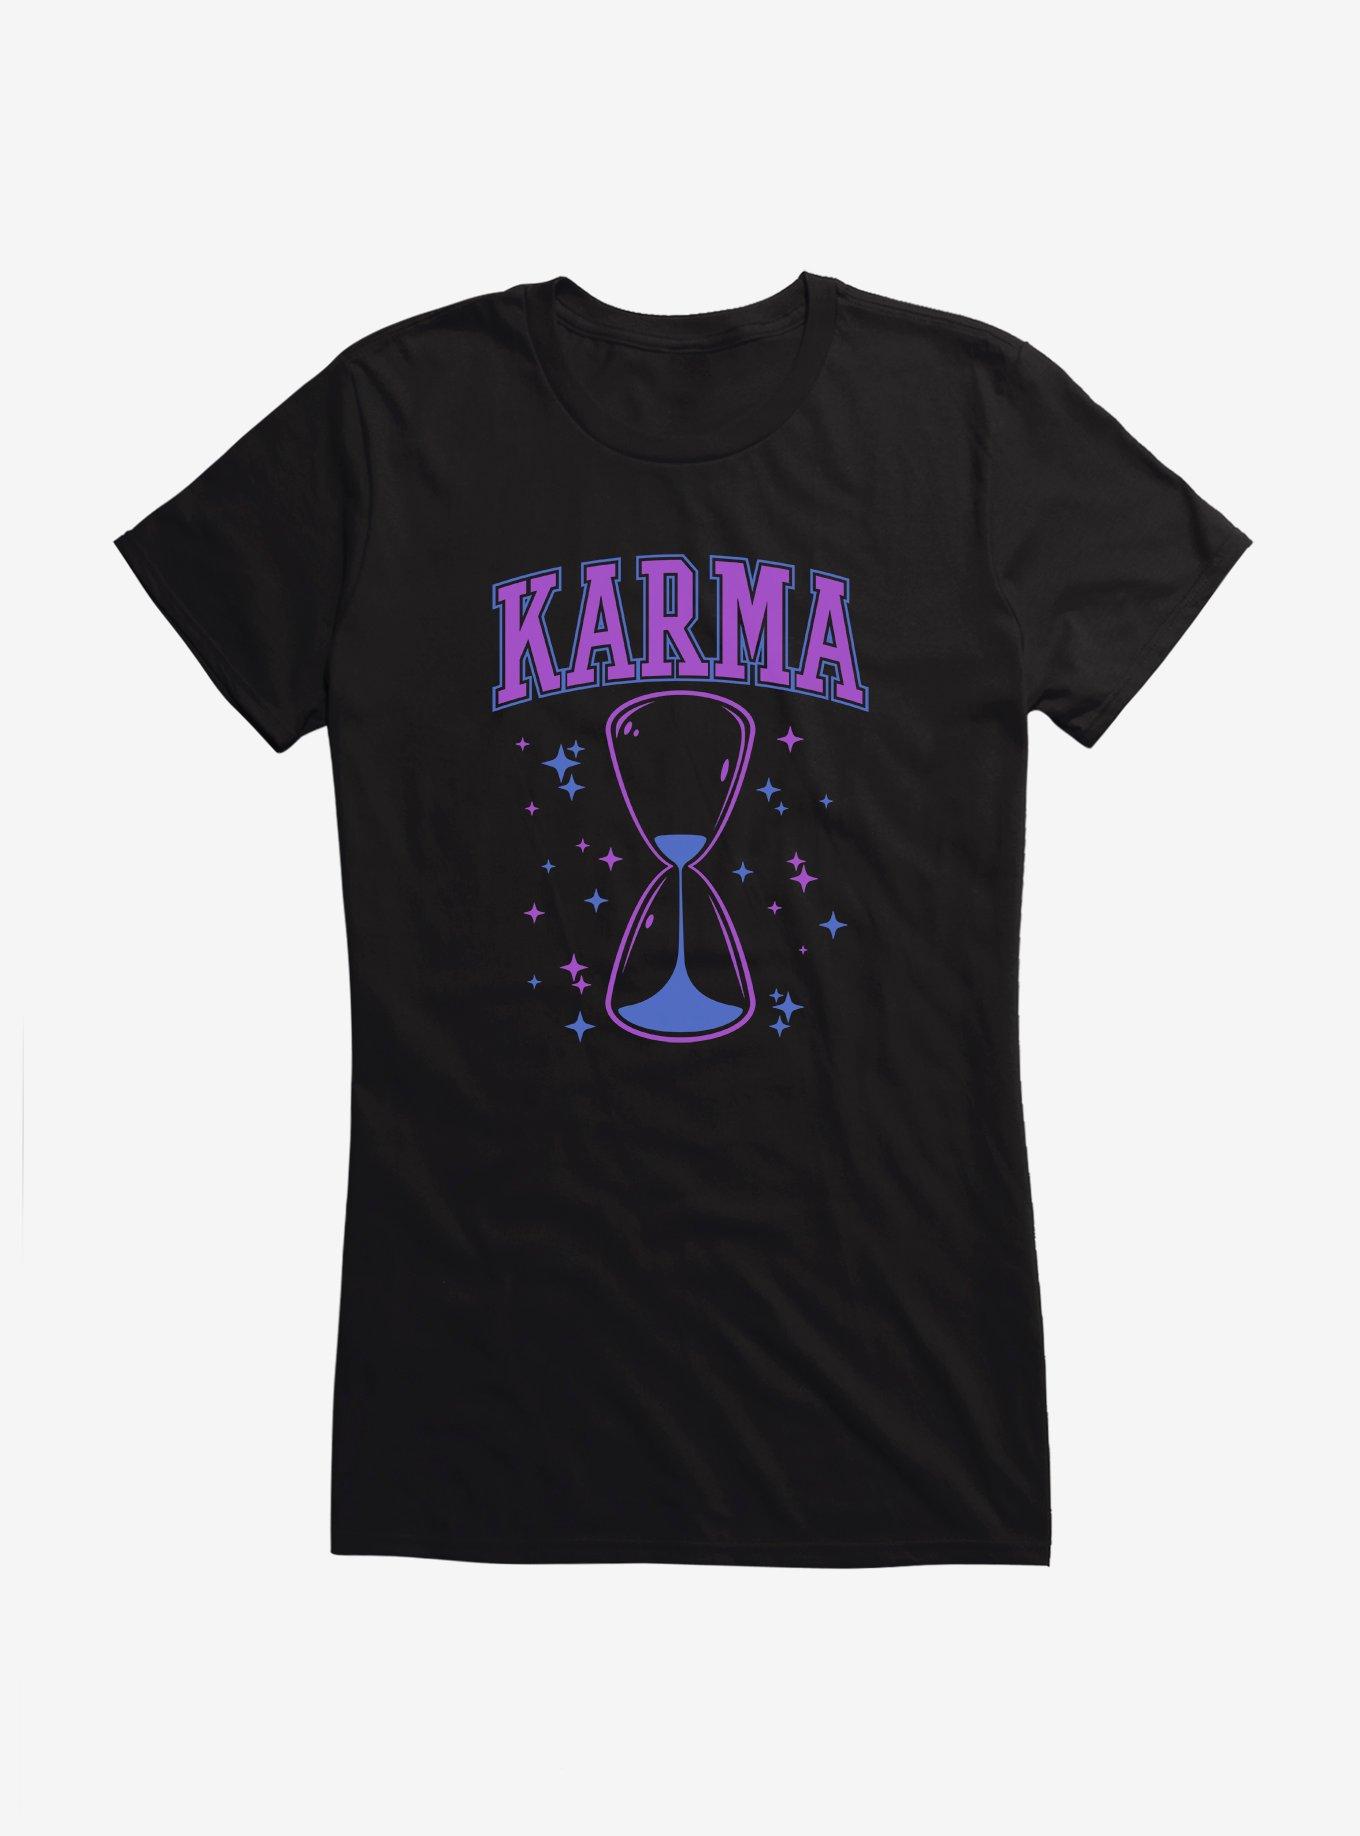 Karma Hourglass Girls T-Shirt